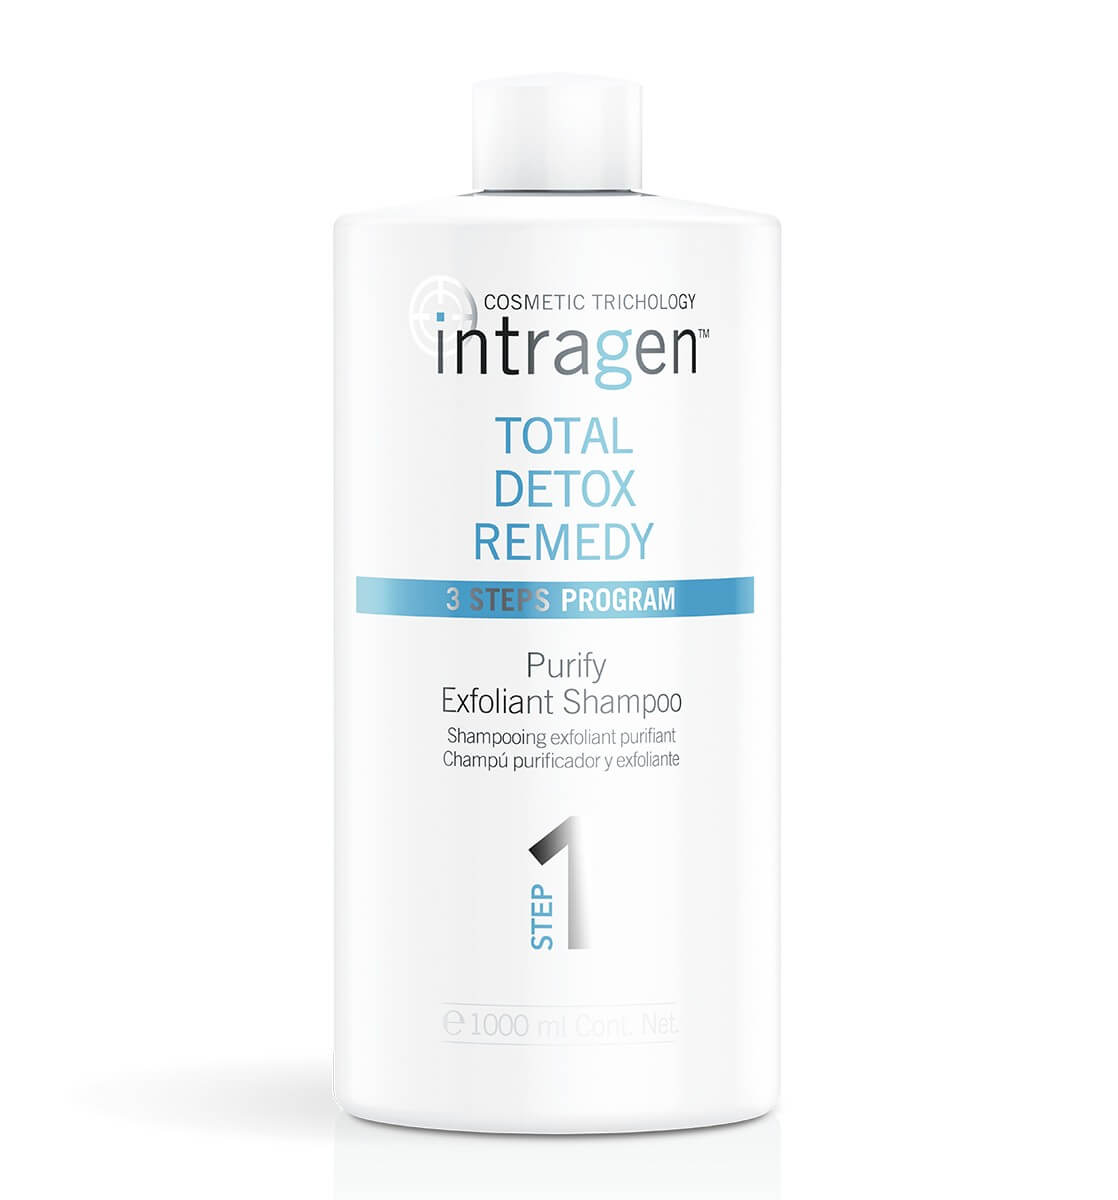 Revlon Intragen TOTAL DETOX REMEDY - Purify Exfoliant Shampoo 1000 ml